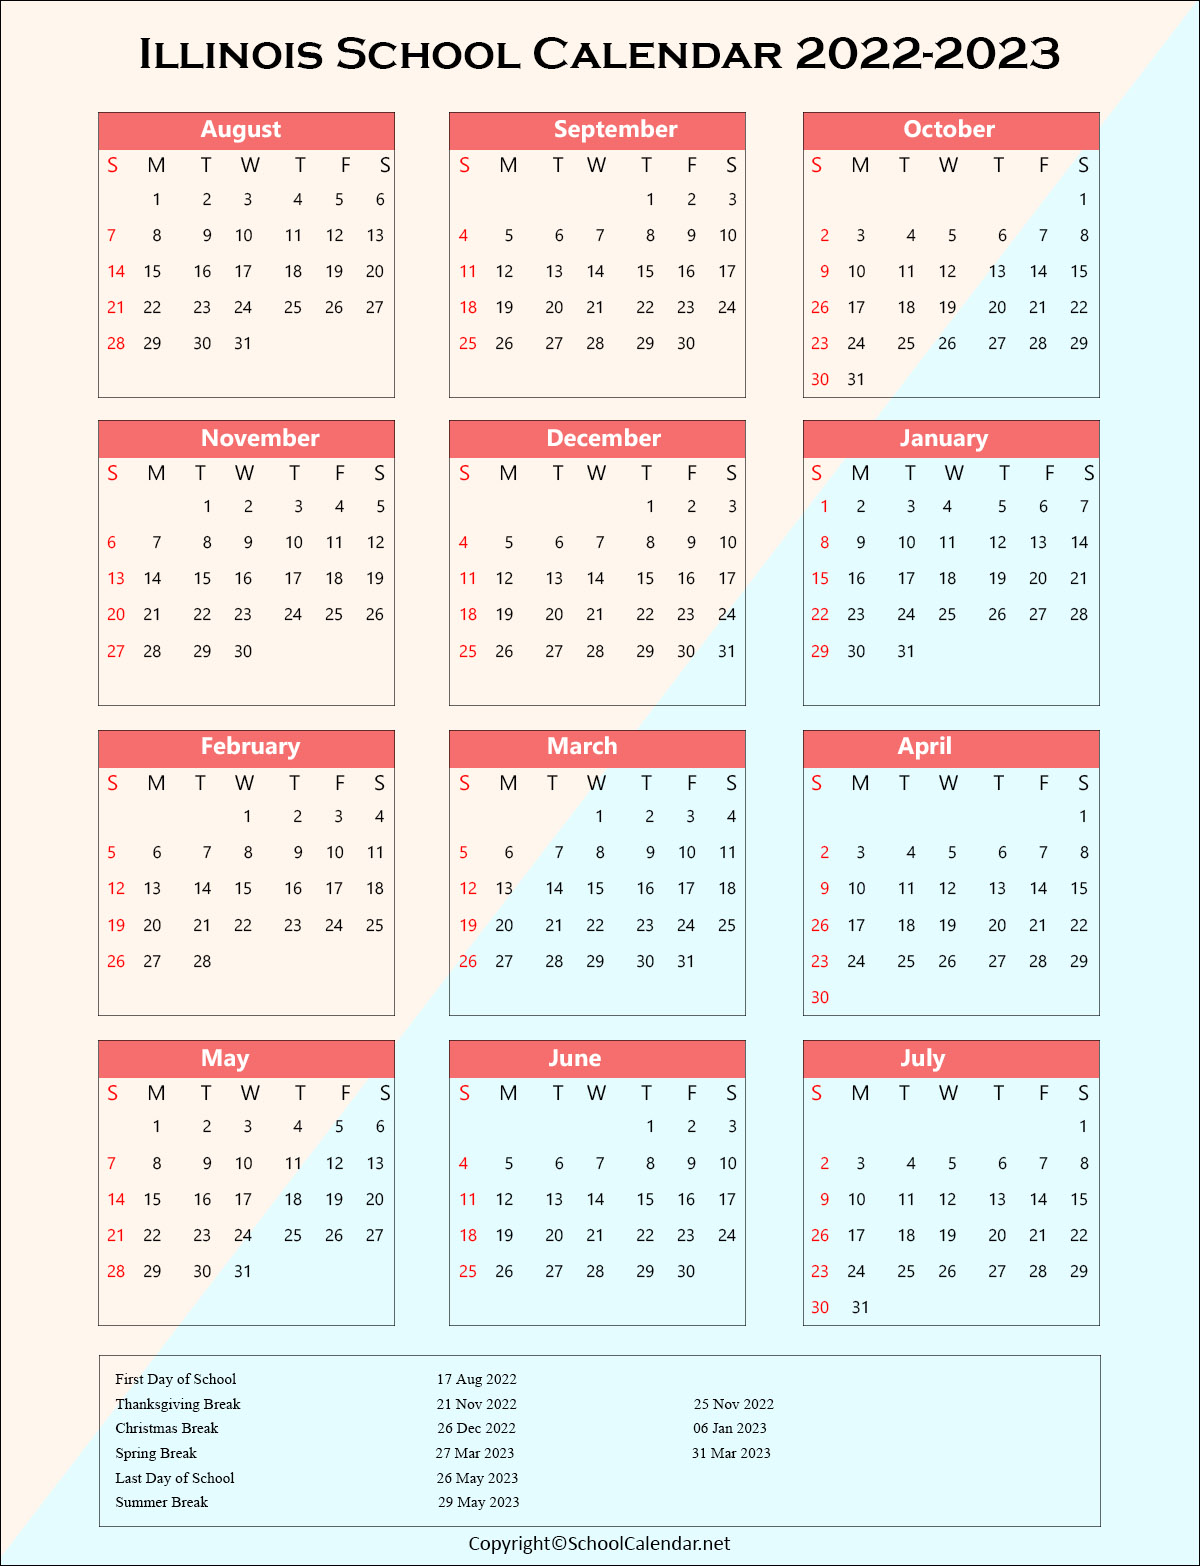 Illinois School Holiday Calendar 2022